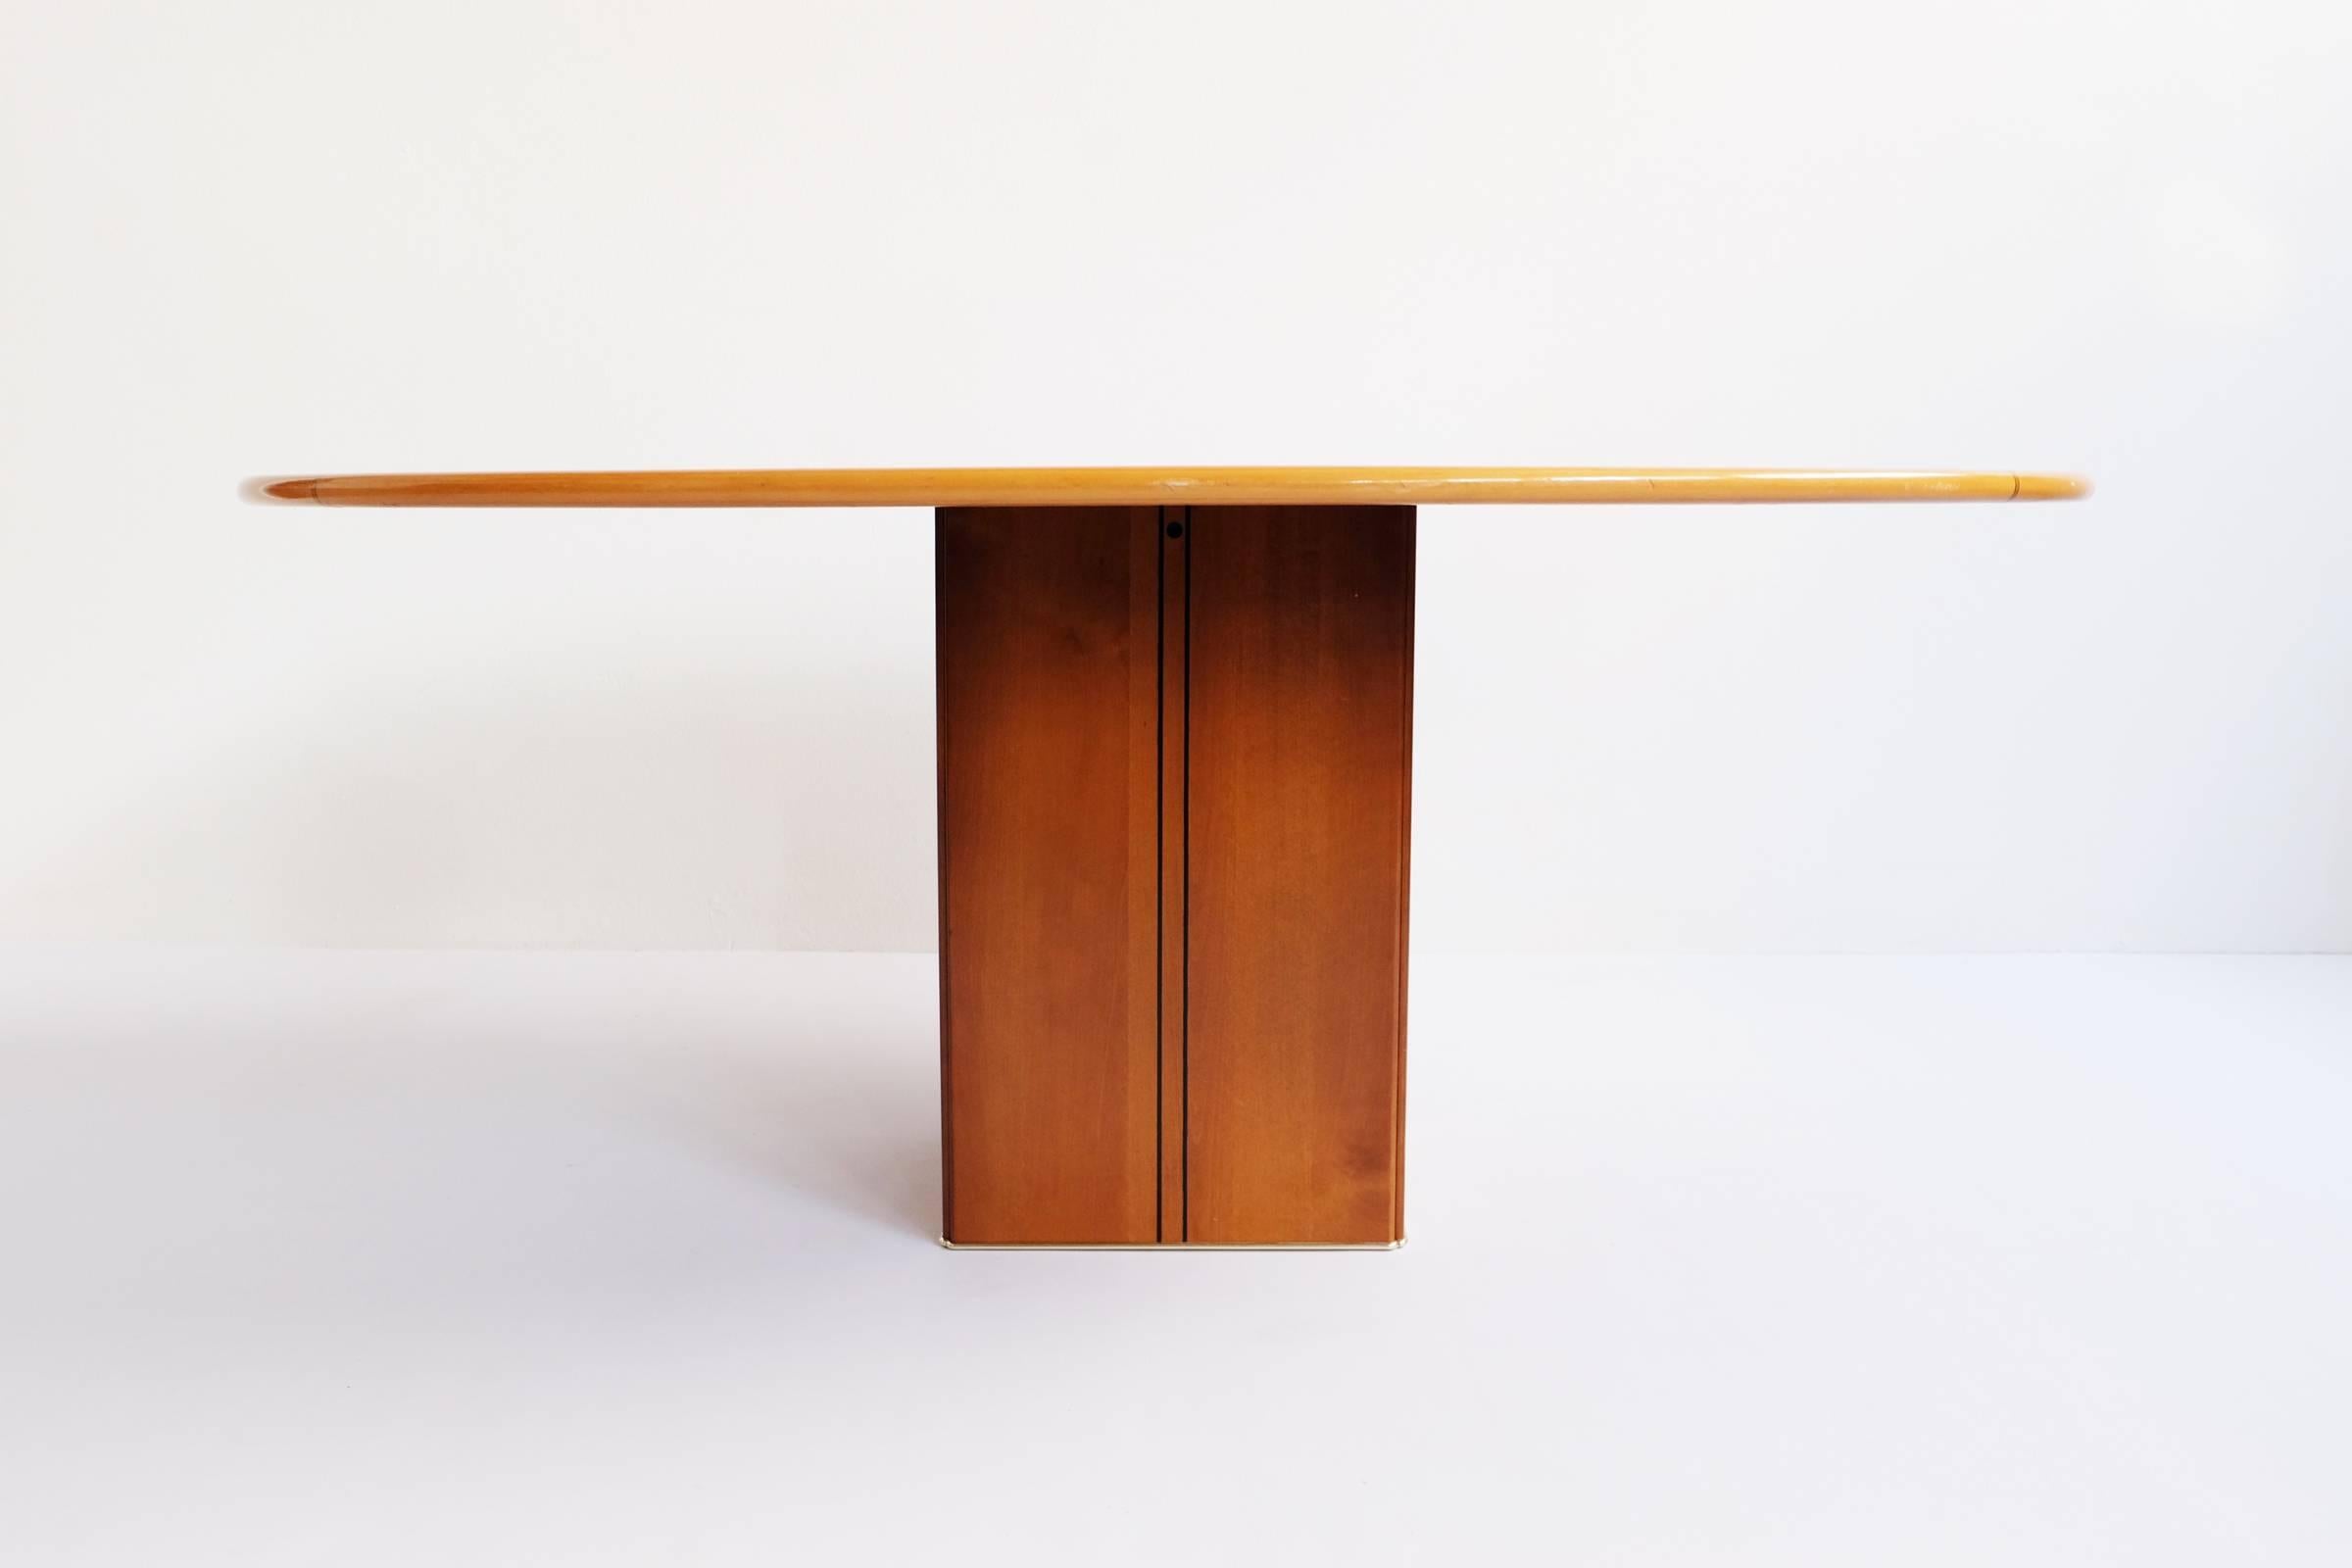 Italian Afra and Tobia Scarpa Luxurious Oval Table Mod, Artona